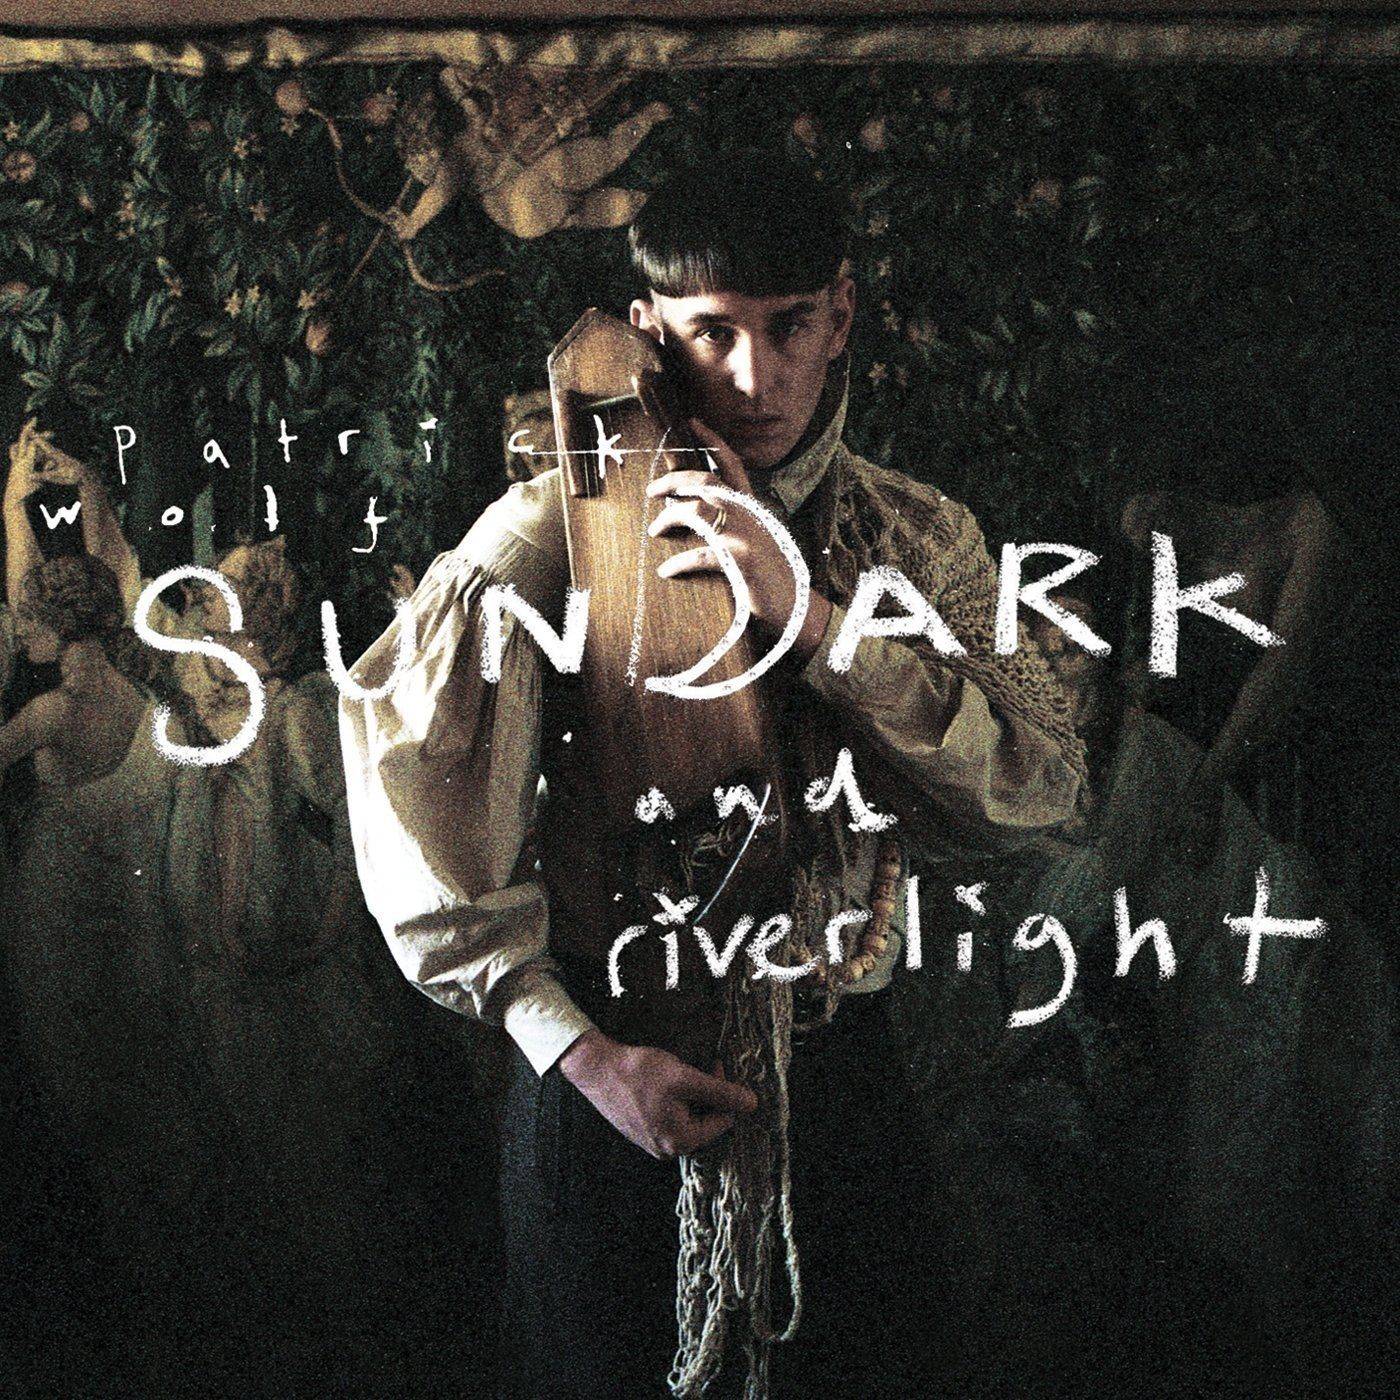 Sundark And Riverlight